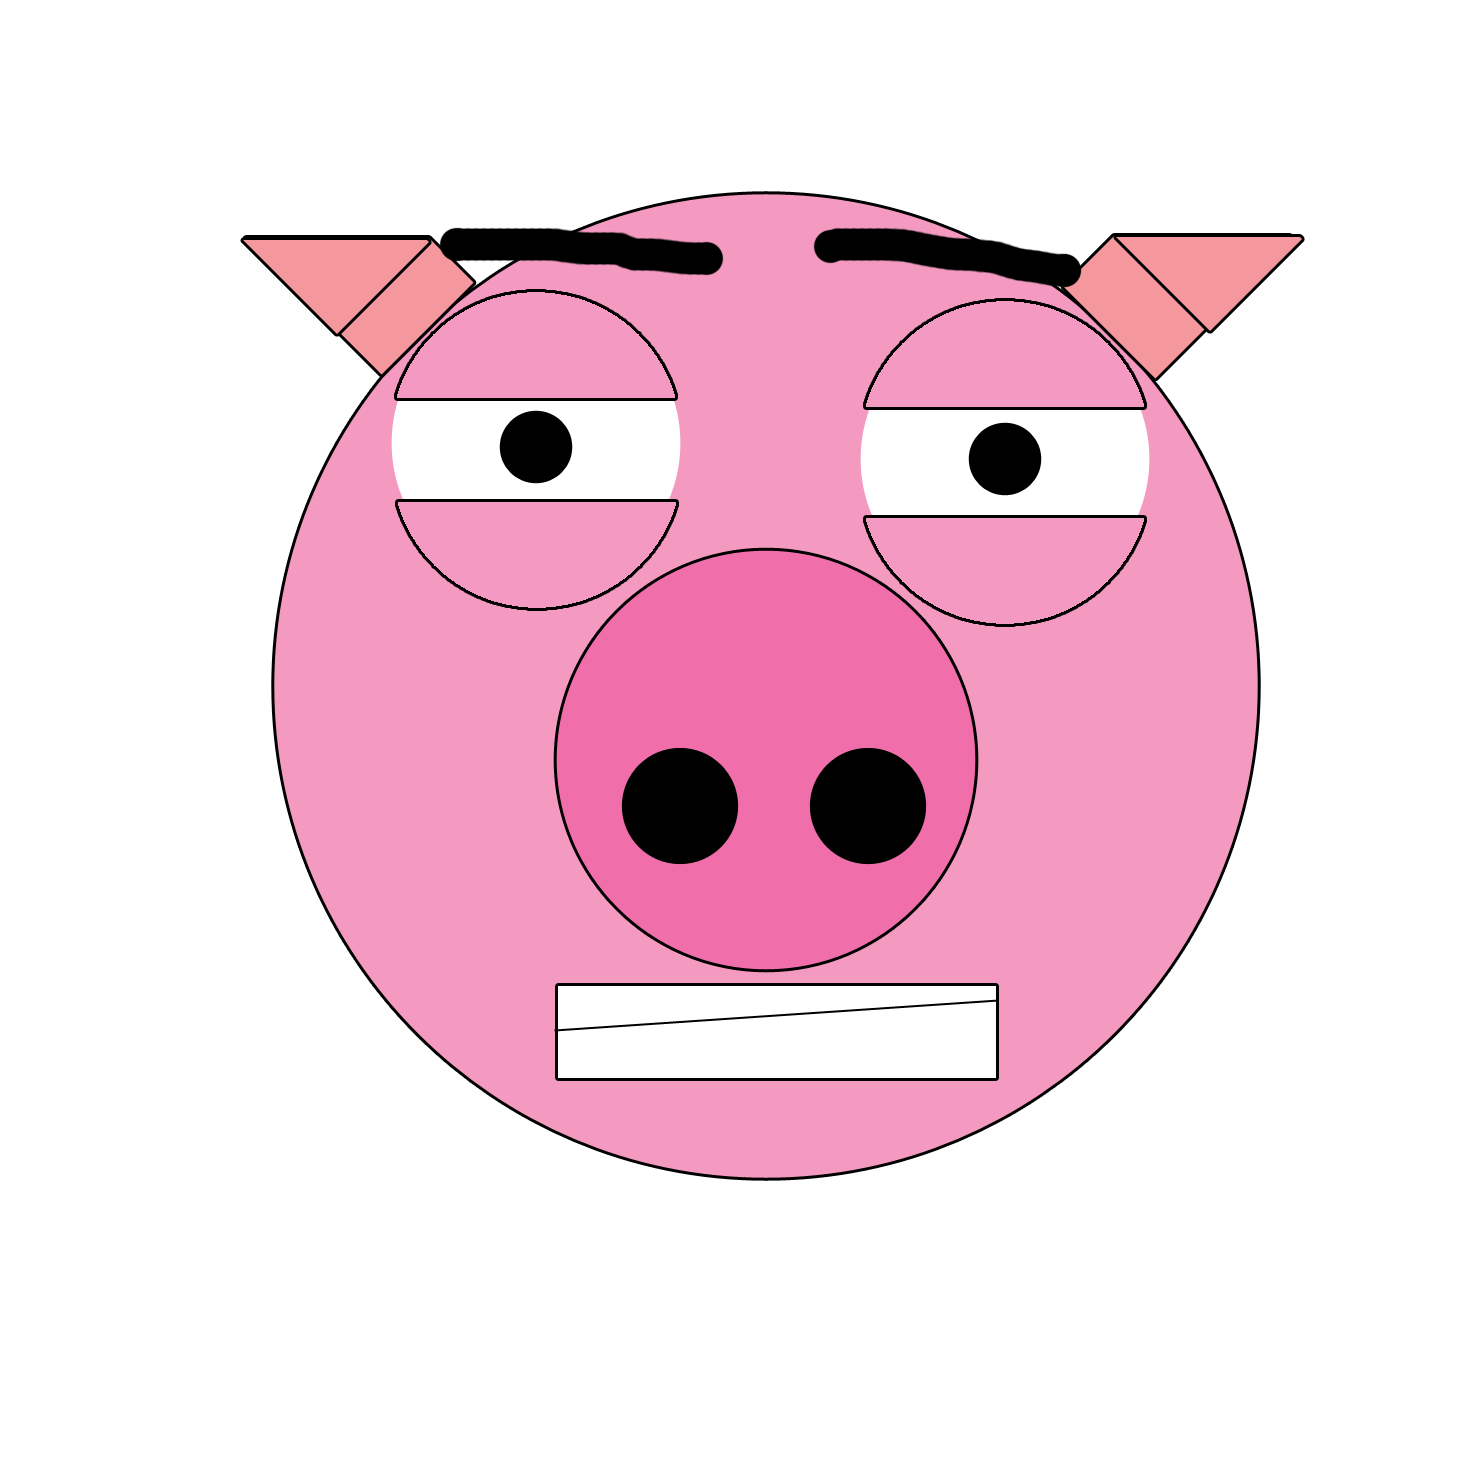 Angry Lol Cute - Free GIF on Pixabay - Pixabay